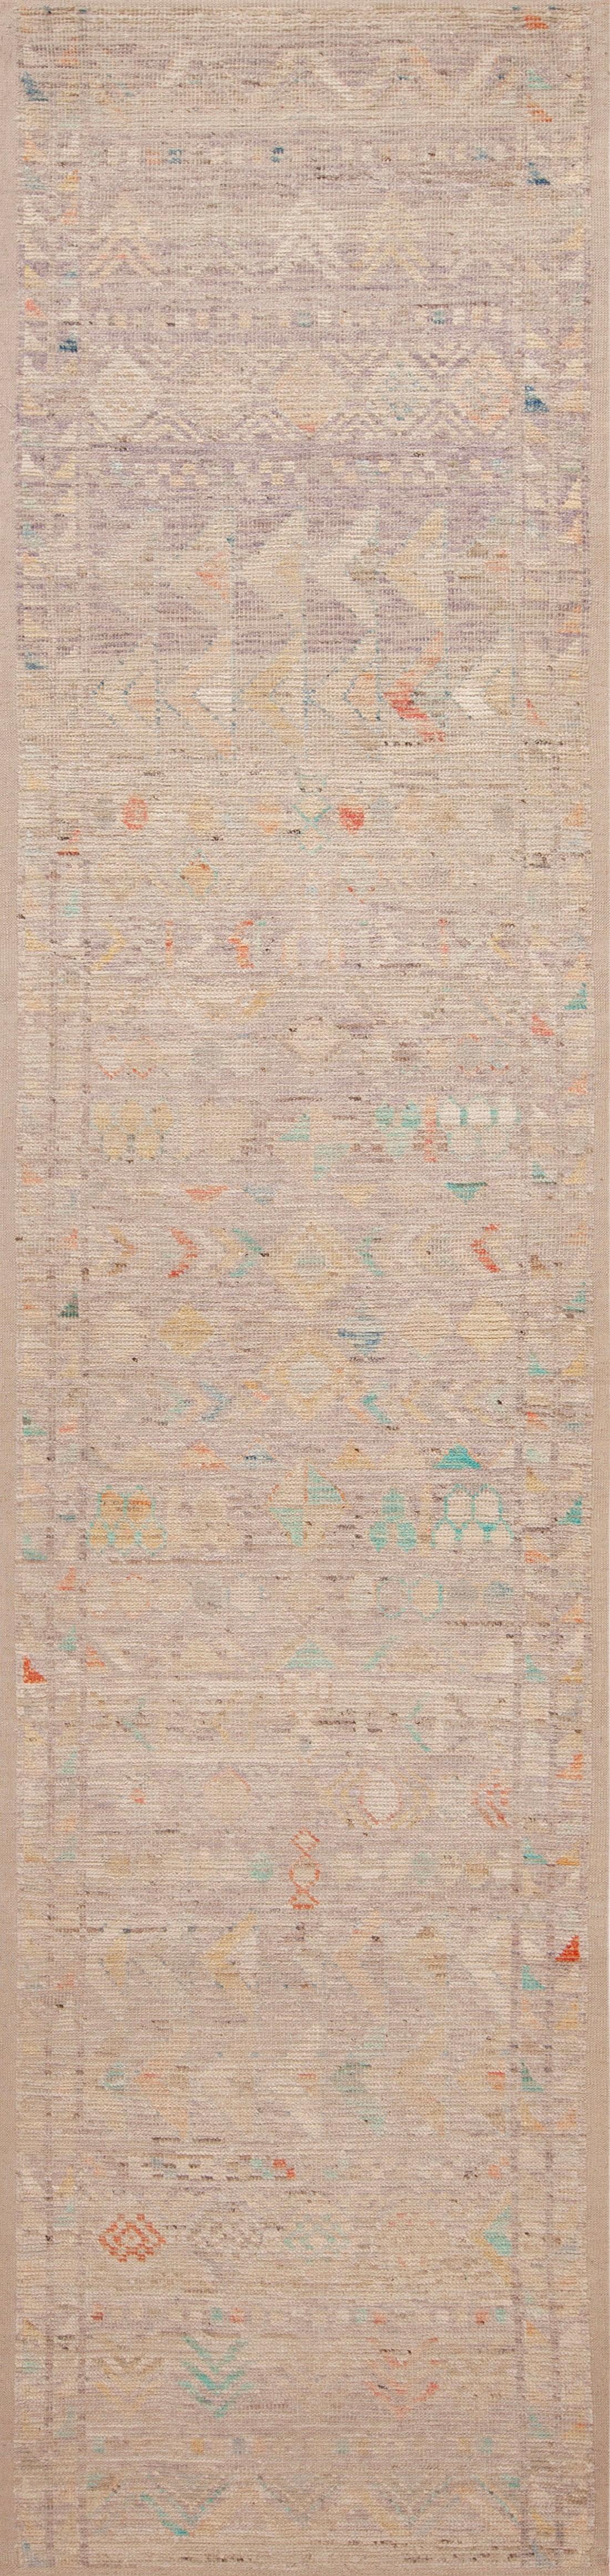 Centrasiatique Collection Nazmiyal - Tapis de course moderne géométrique et tribal Abrash - 3'4